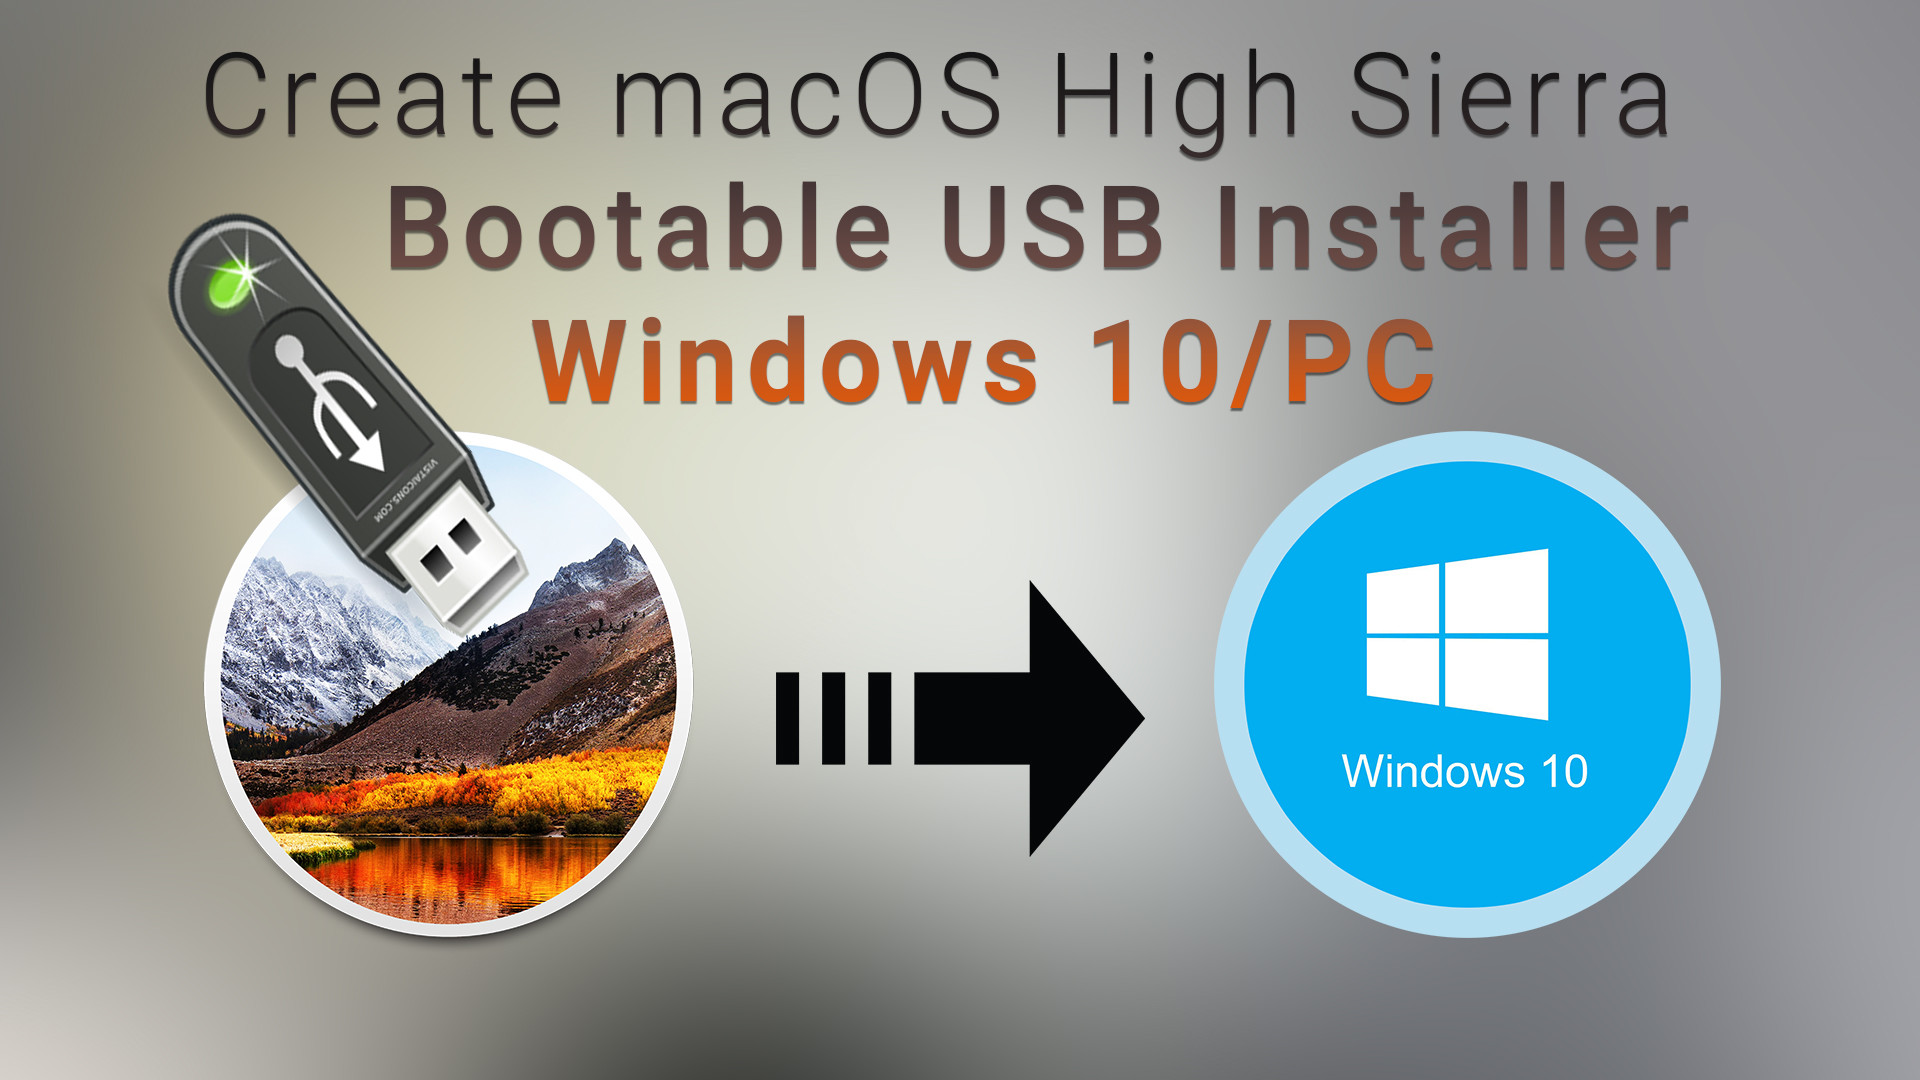 arkitekt vegetation Dinkarville How to Create macOS High Sierra Bootable USB Installer on Windows 10 -  wikigain